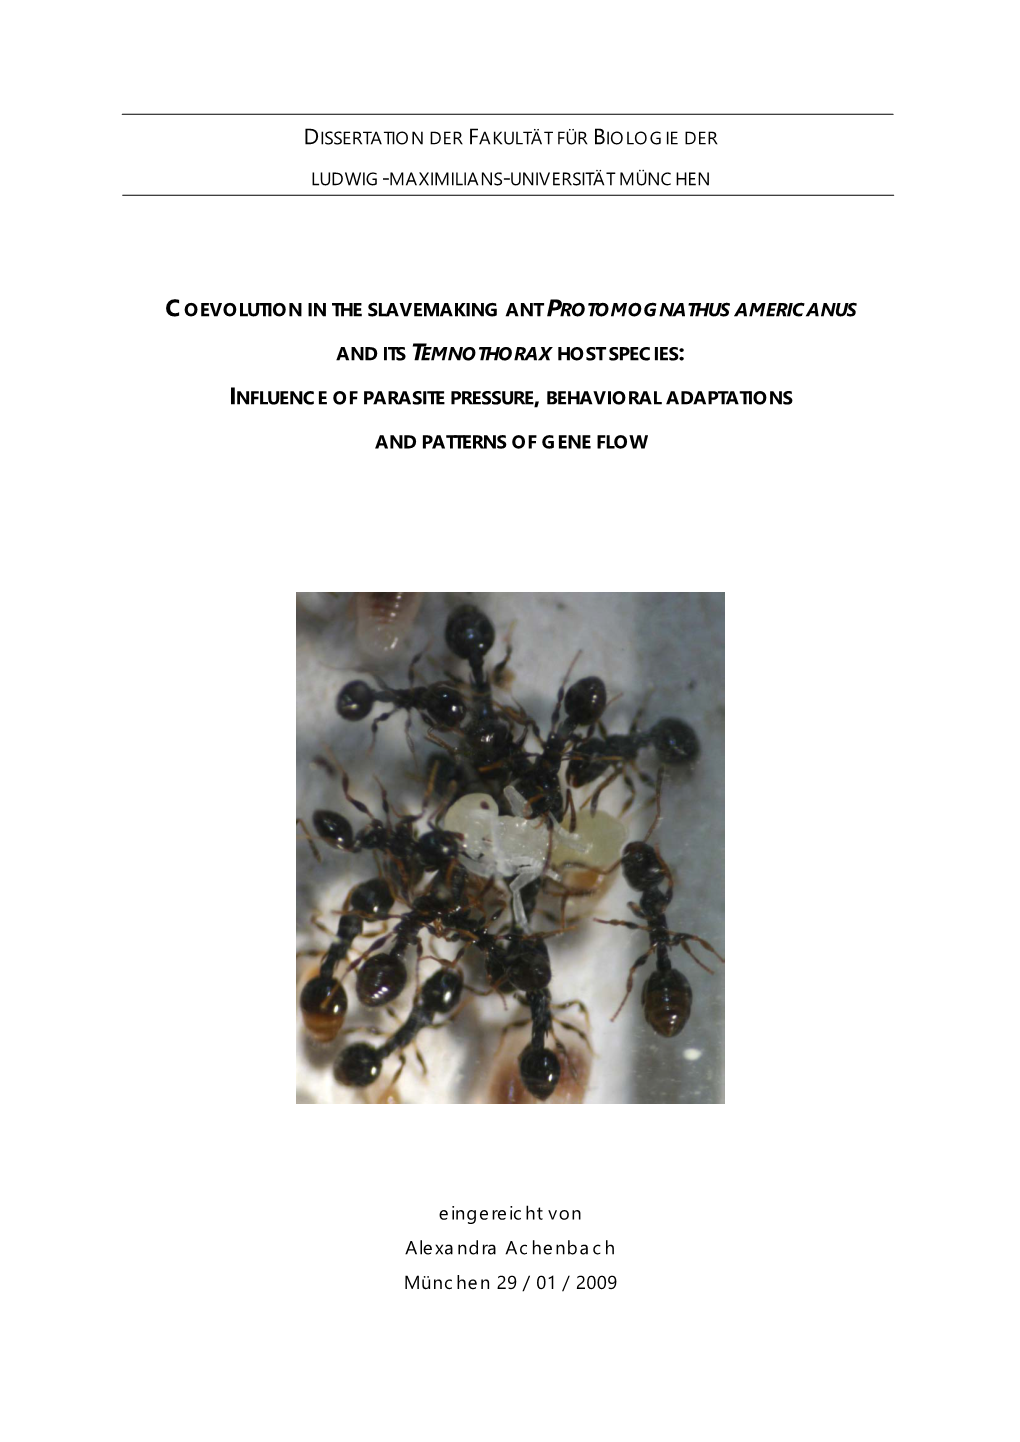 Coevolution in the Slavemaking Ant Protomognathus Americanus